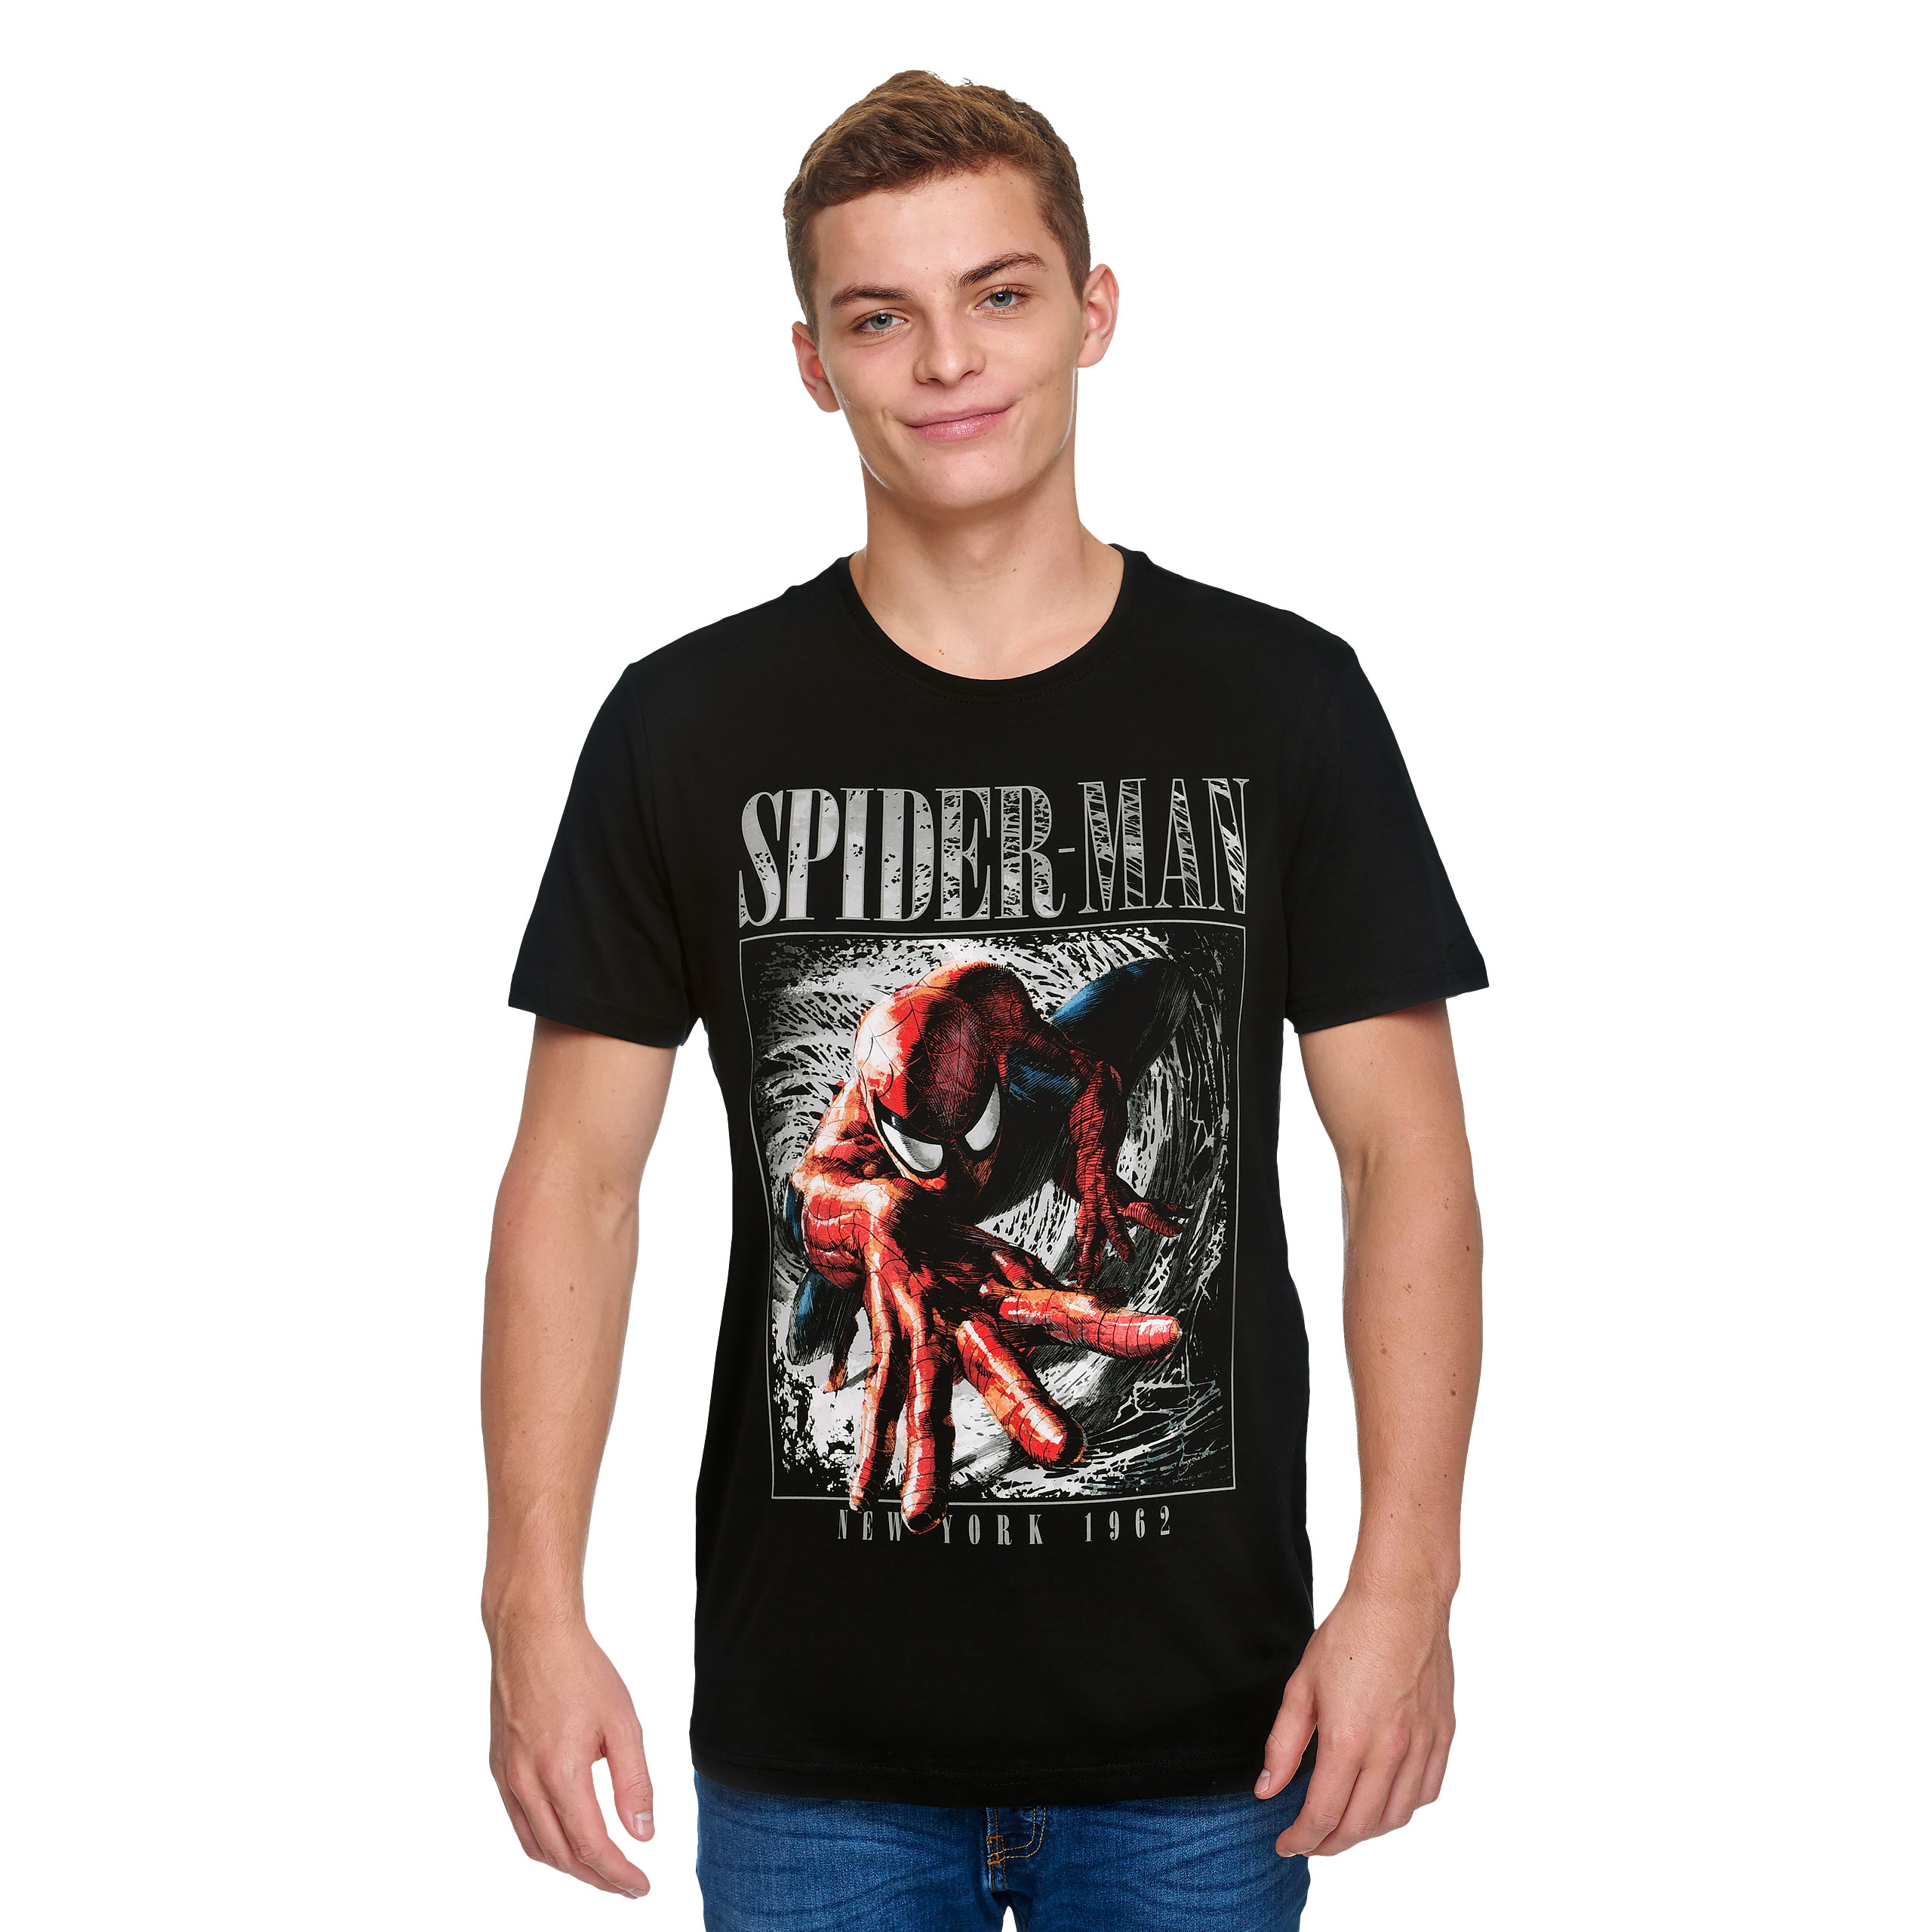 Spider-Man - New York 1962 Zwart T-Shirt